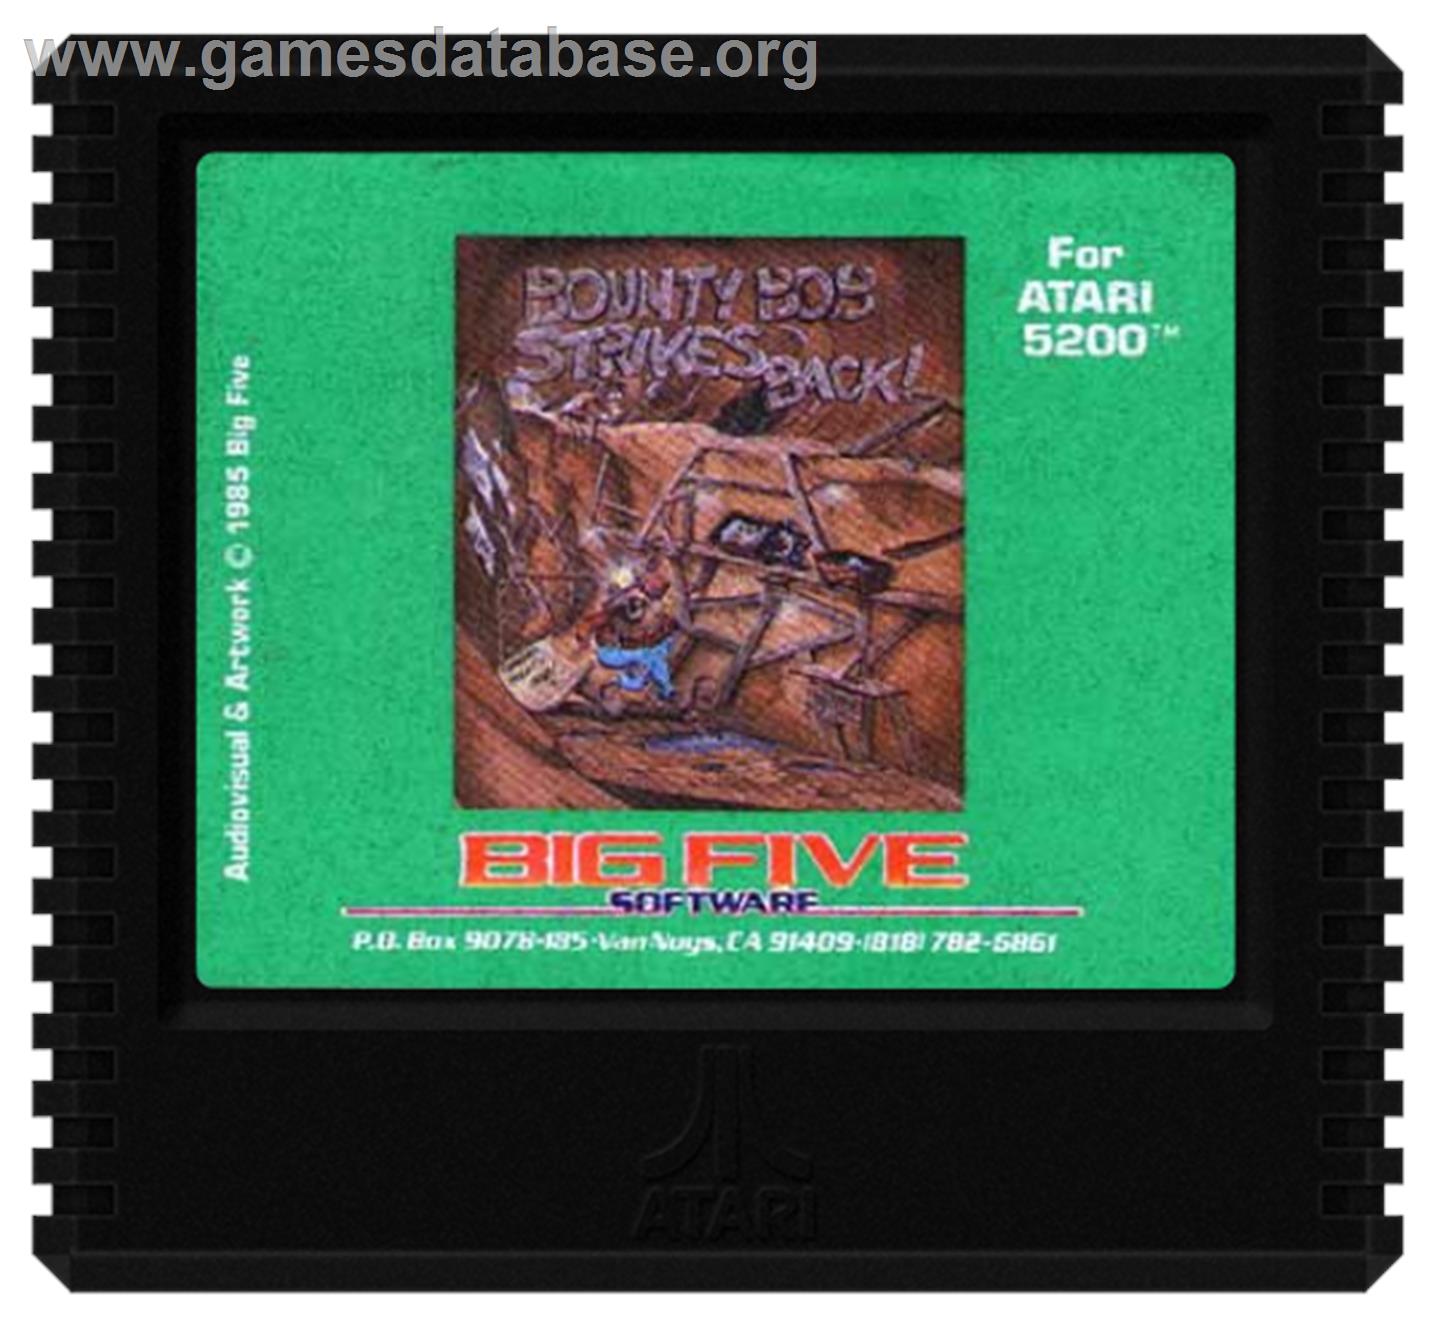 Bounty Bob Strikes Back - Atari 5200 - Artwork - Cartridge